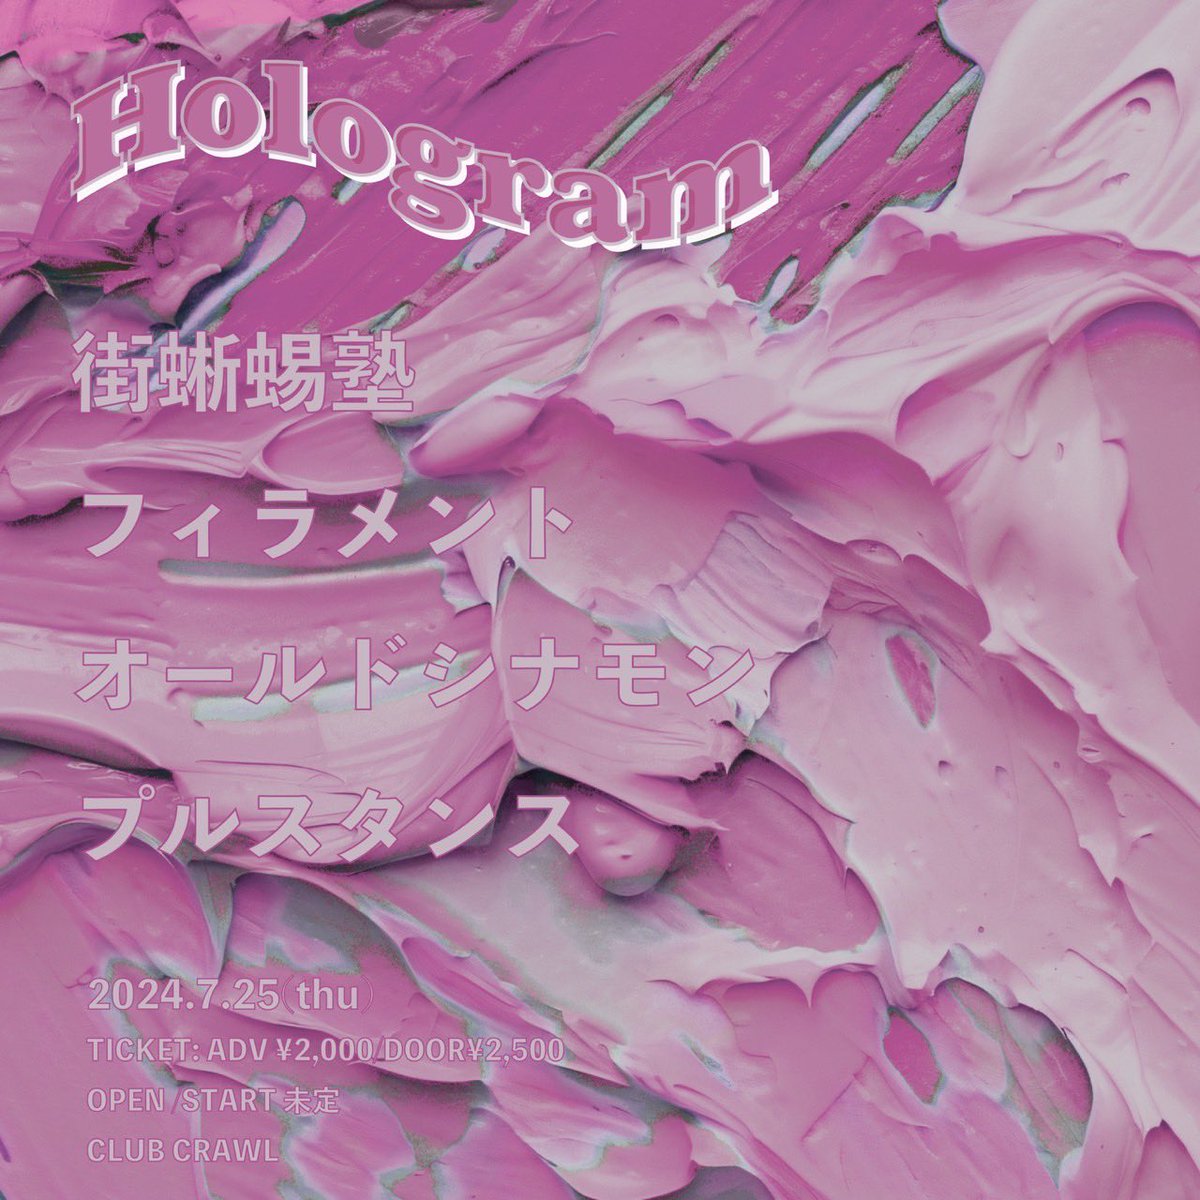 【🦎LIVE INFO🦎】

2024.07.25 (Thu)
“Hologram” at 渋谷CLUB CRAWL

⏰OP/ST TBA
🎫Ticket ¥2,000/¥2,500 (別途1D)

w/
フィラメント
オールドシナモン
プルスタンス

東京へ行きます！🗼
関東の皆様是非お待ちしております🔥